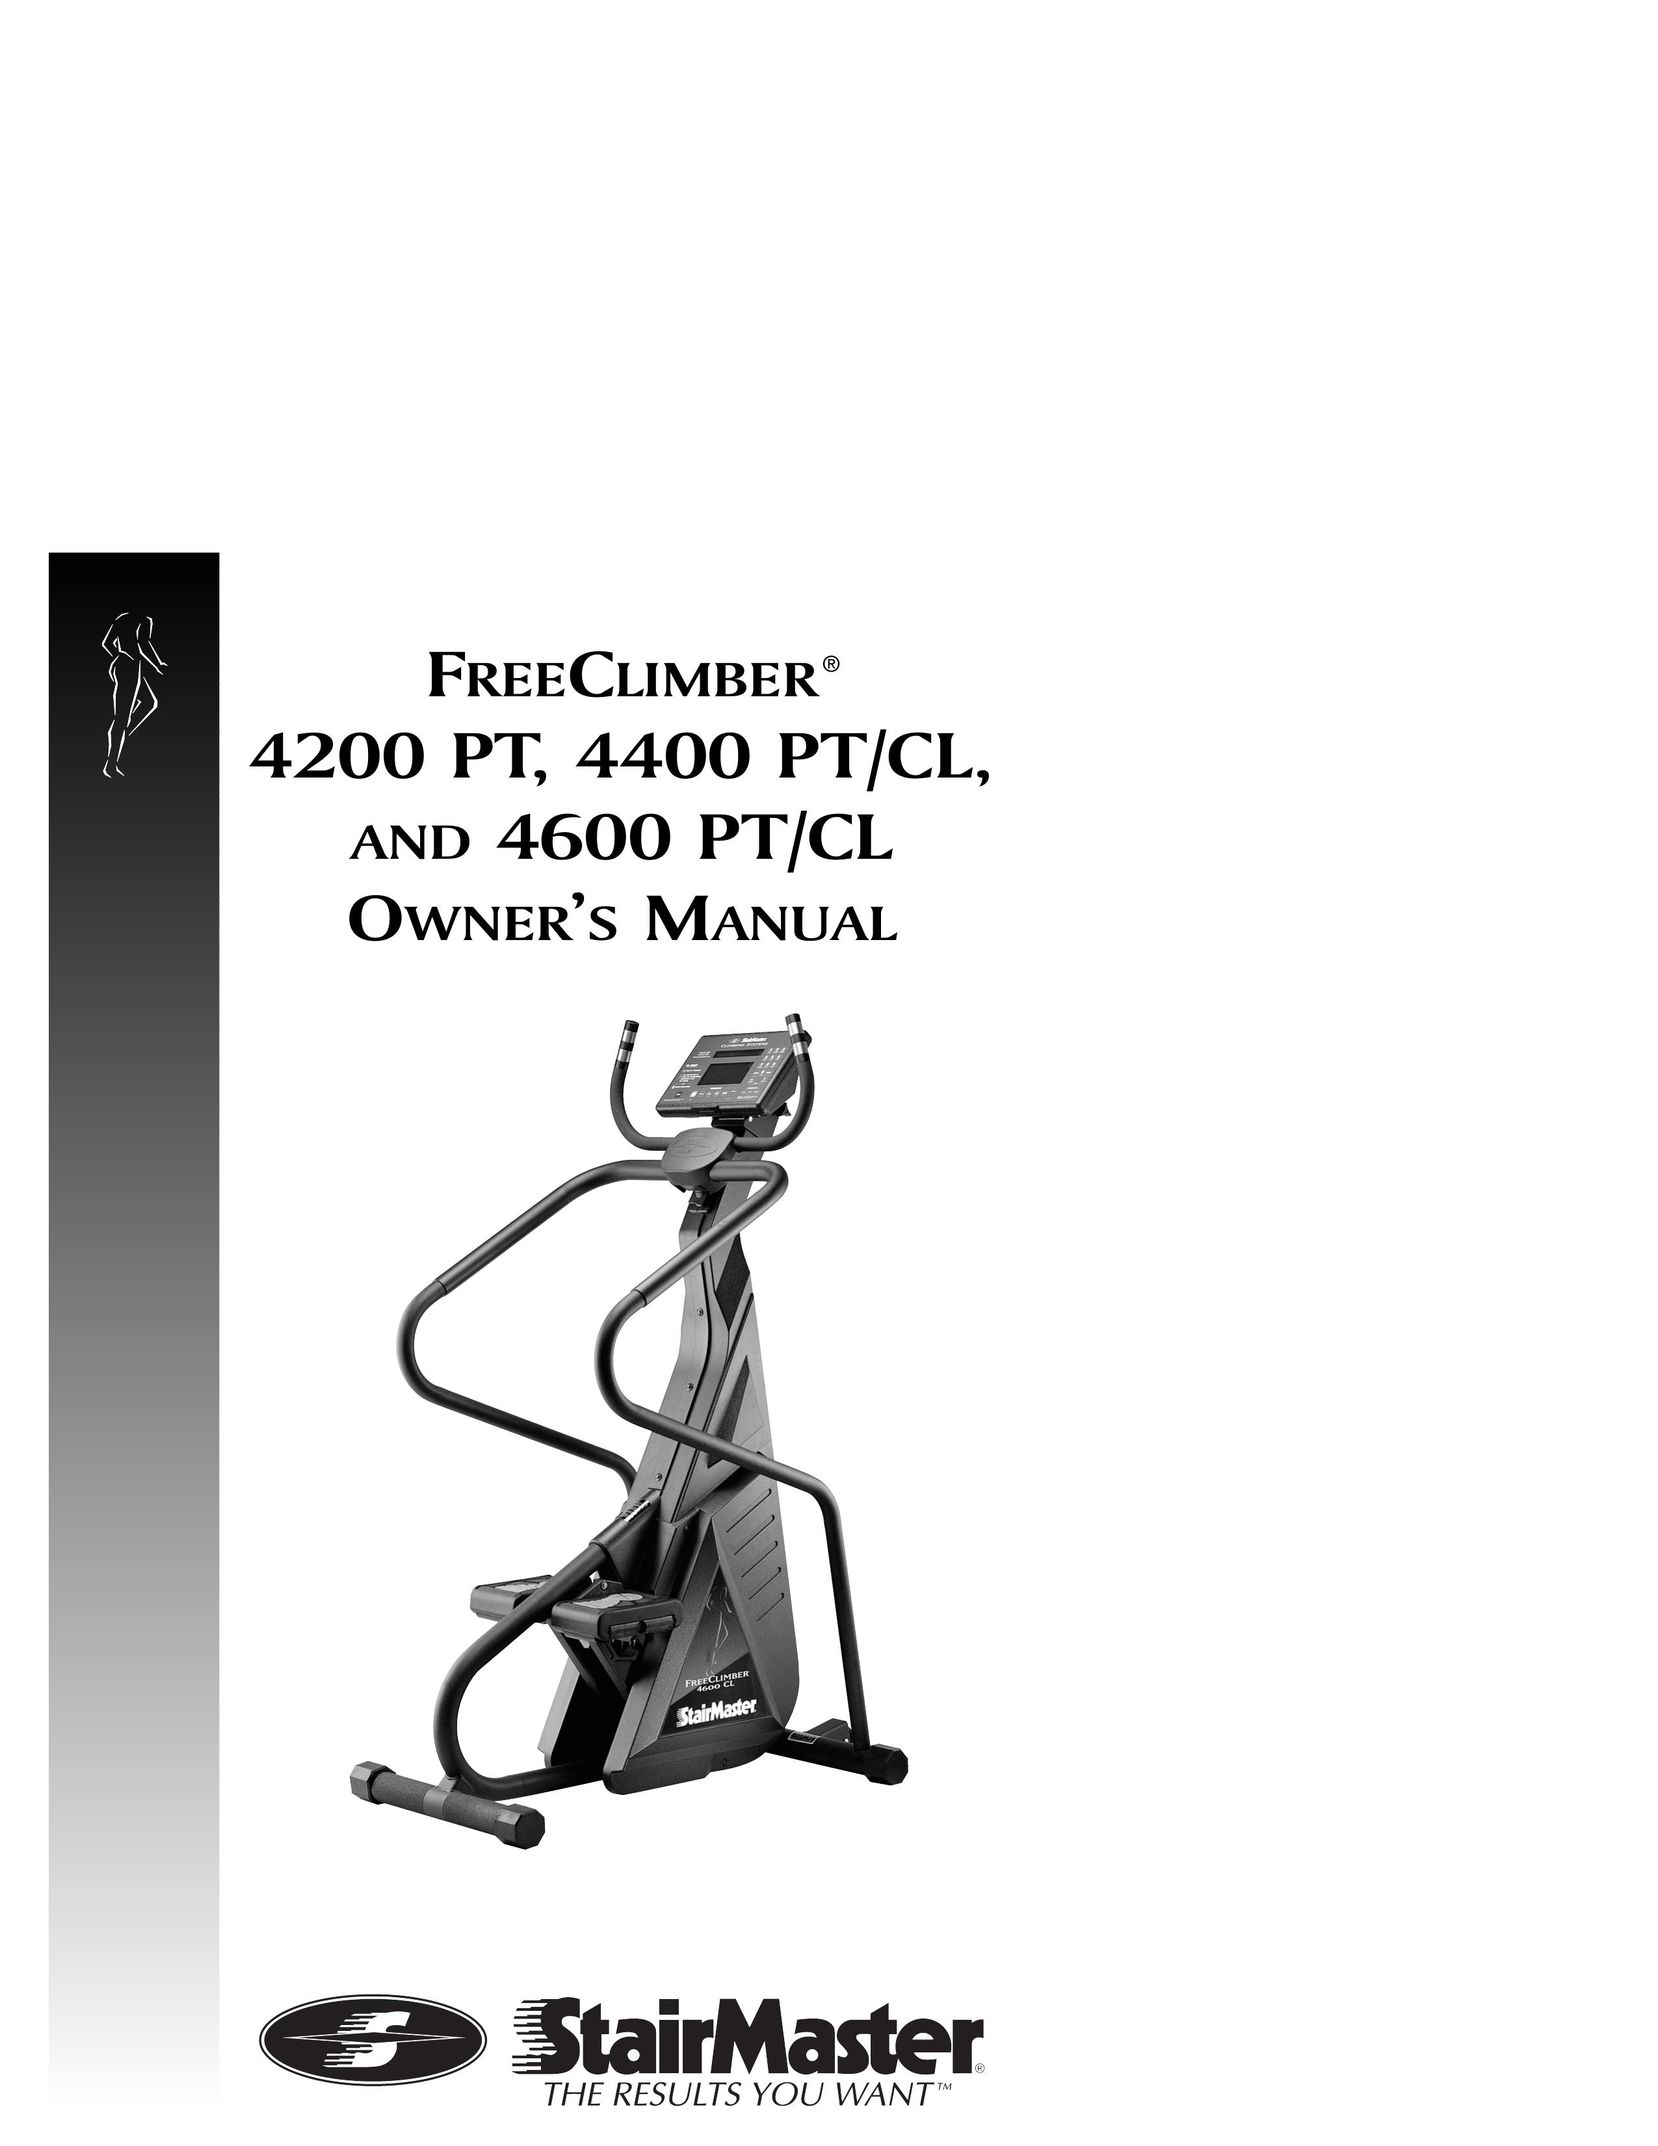 Stairmaster 4600 PT/CL Fitness Equipment User Manual